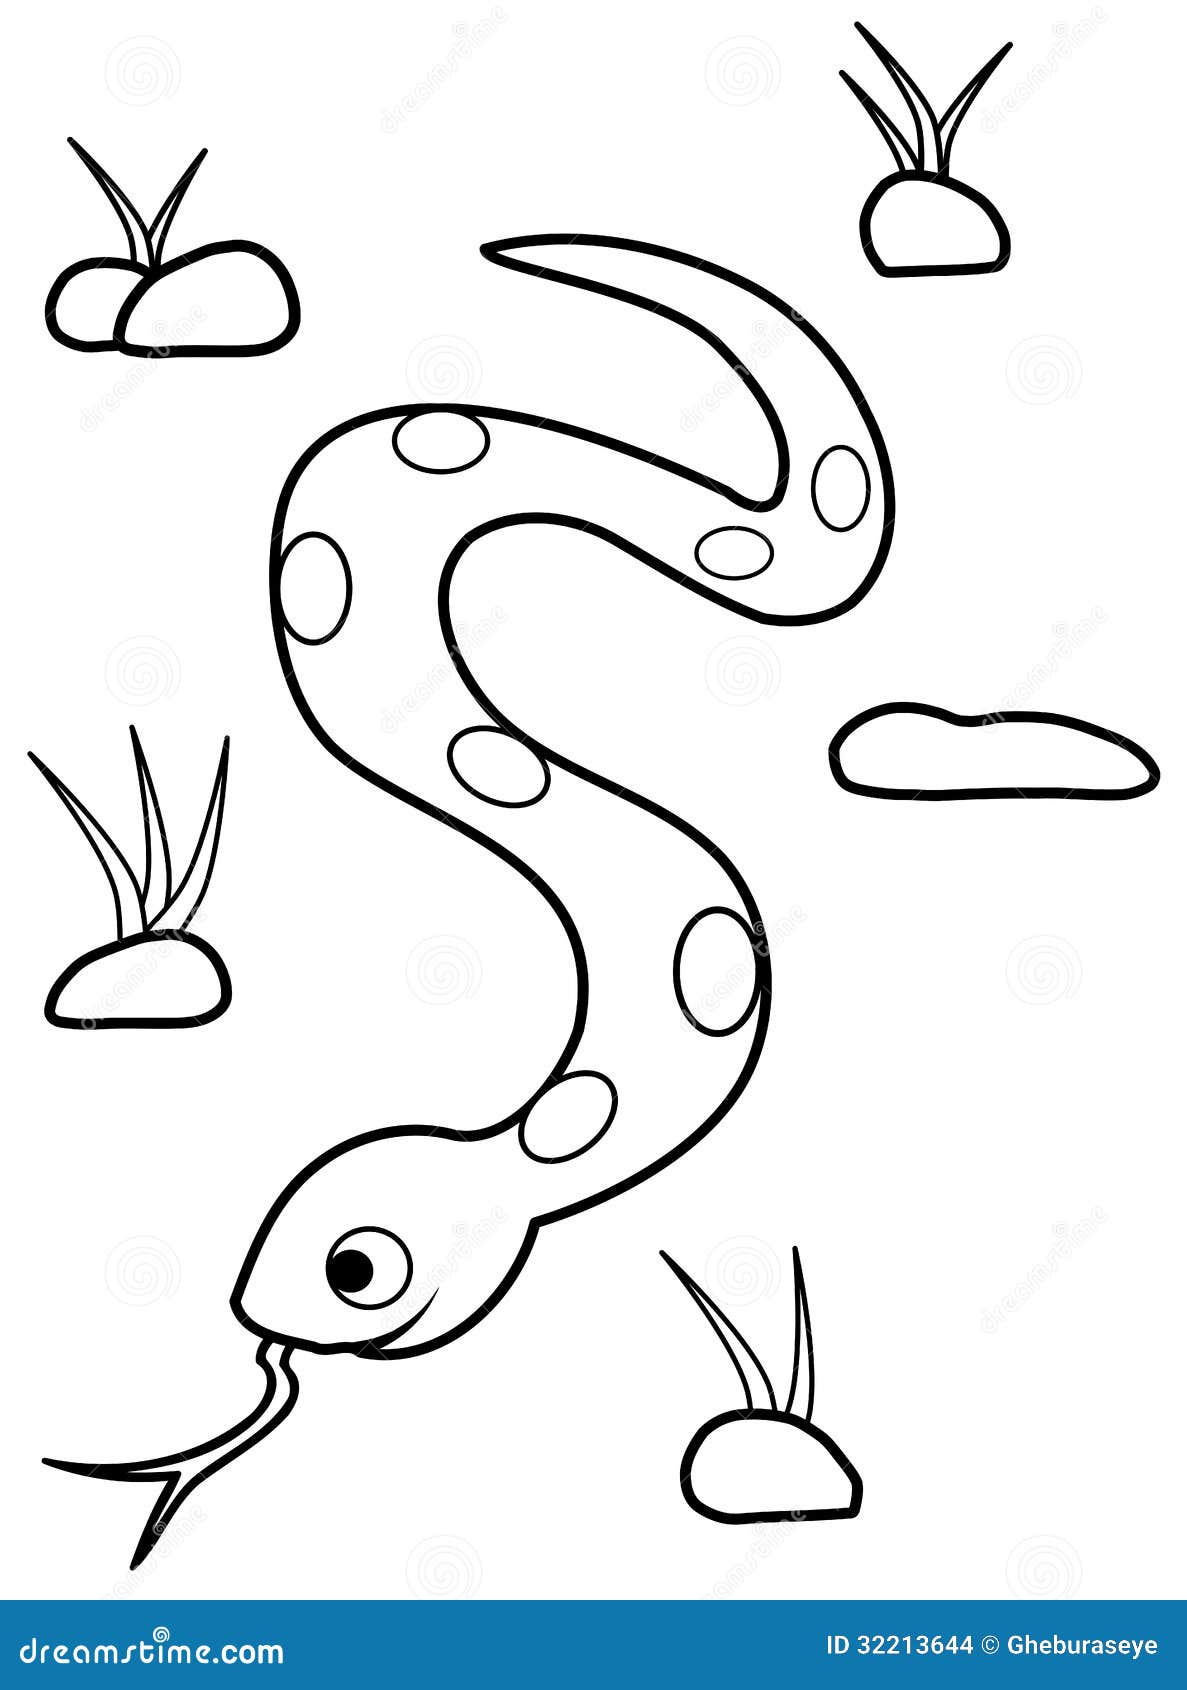 Coloring snake stock illustration. Illustration of epic ...